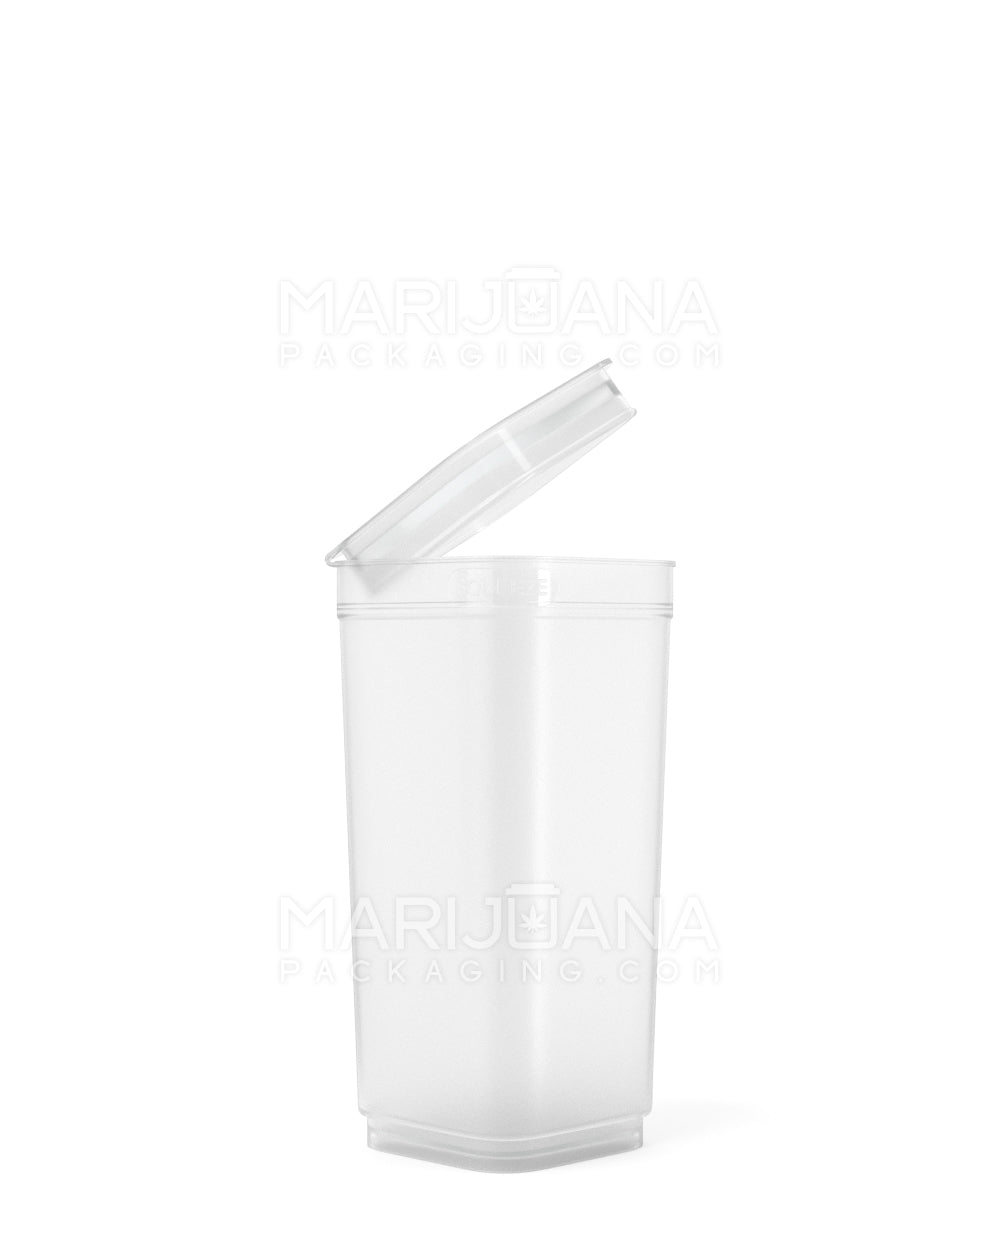 POLLEN GEAR 100% Recyclable Transparent Clear Pop Box Pop Top Bottles | 30dr - 7g | Sample